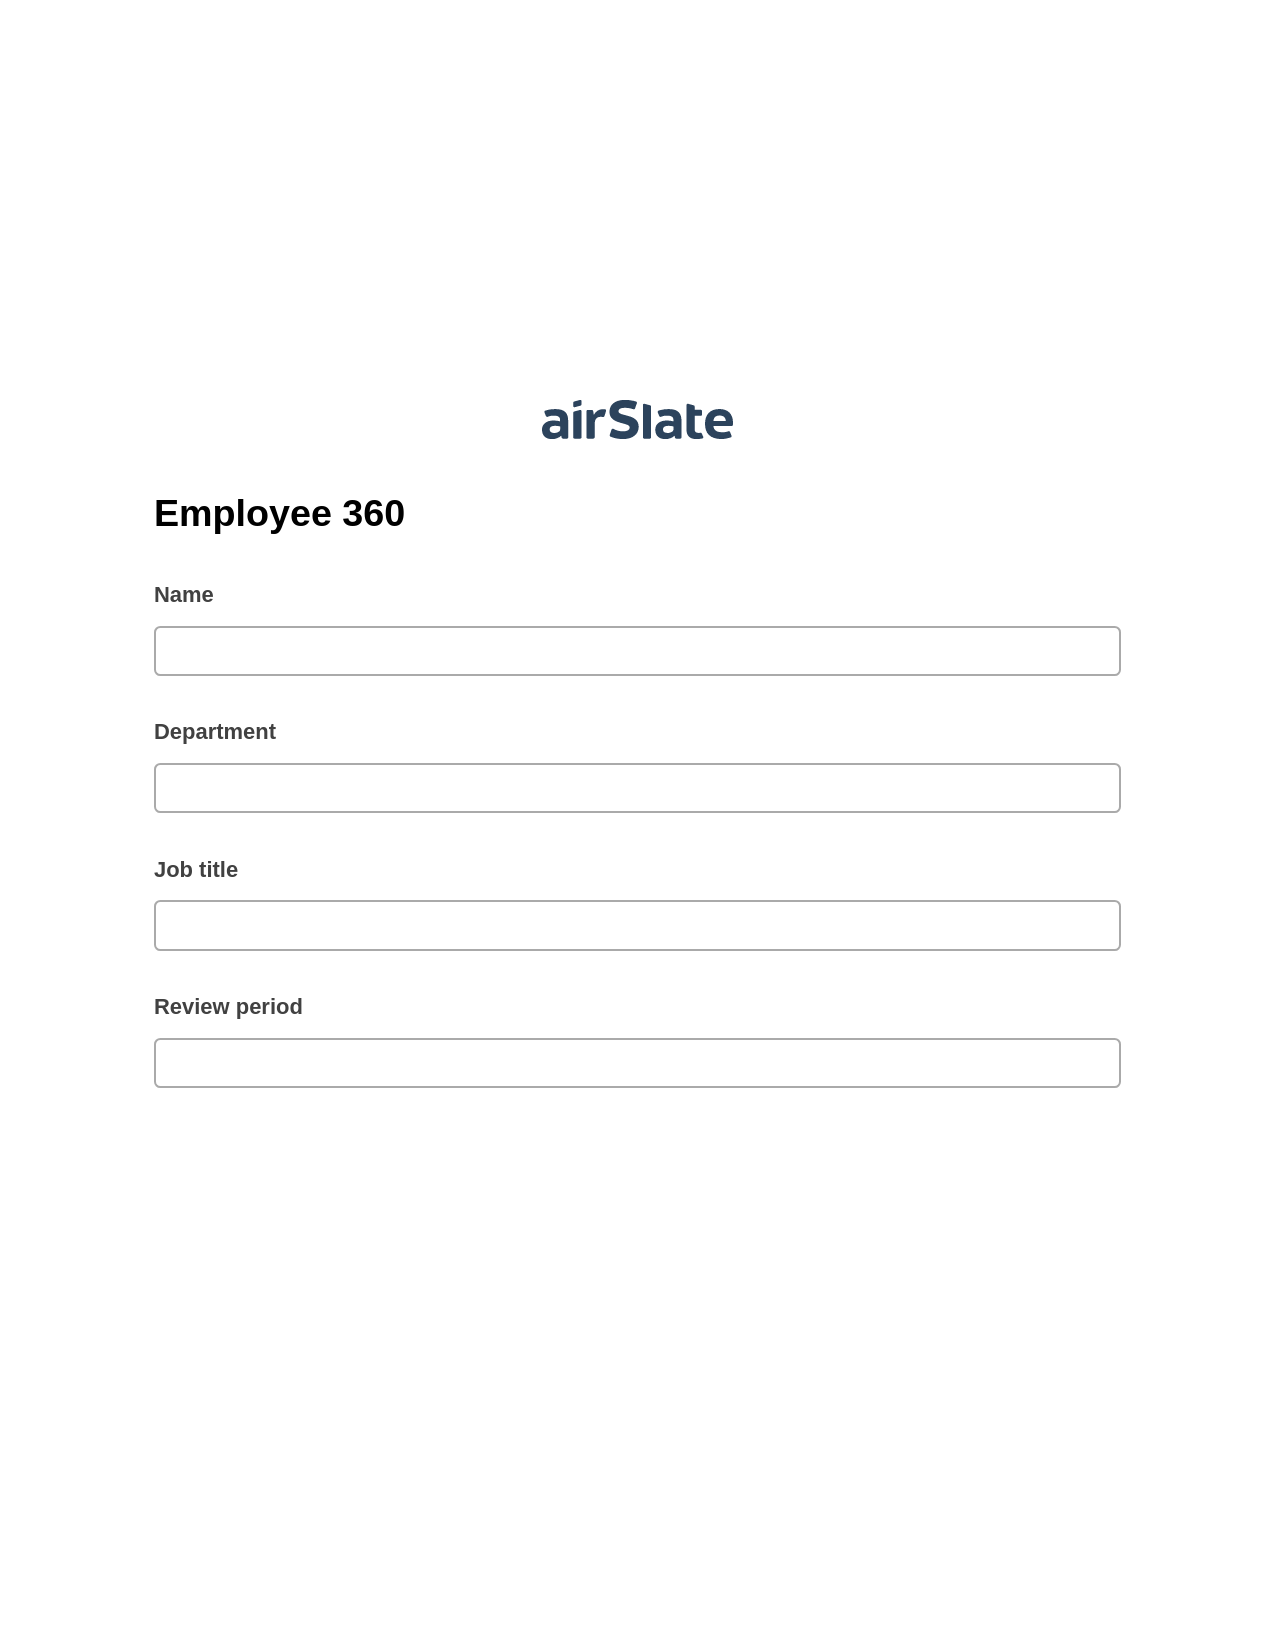 Multirole Employee 360 Pre-fill from Salesforce Records Bot, Google Sheet Two-Way Binding Bot, Export to Google Sheet Bot